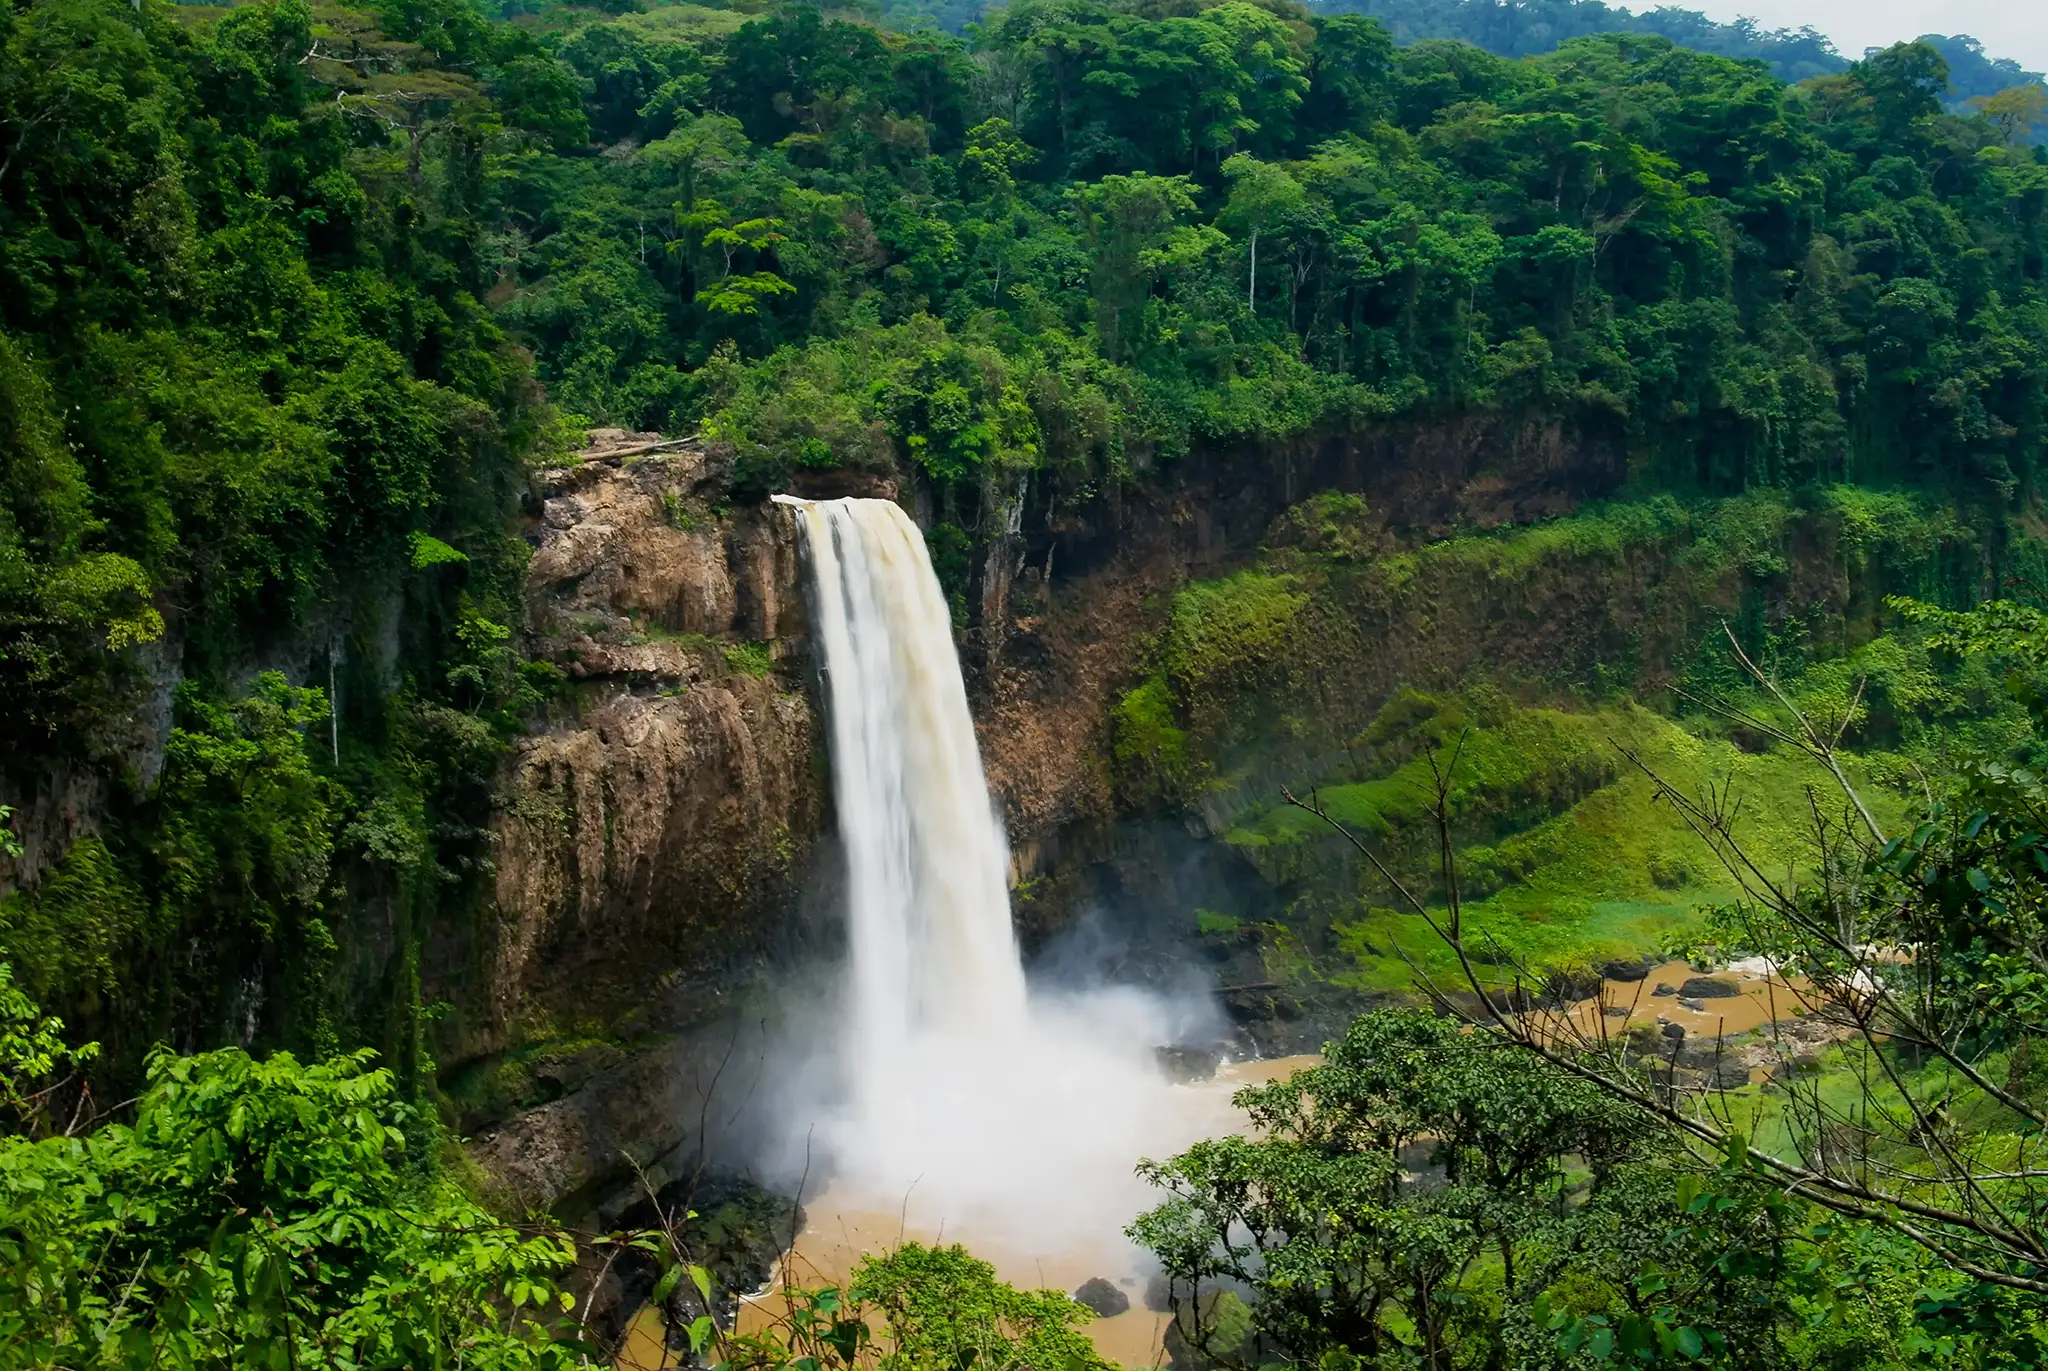 Panorama of main cascade of Ekom waterfall at Nkam river, Cameroon.